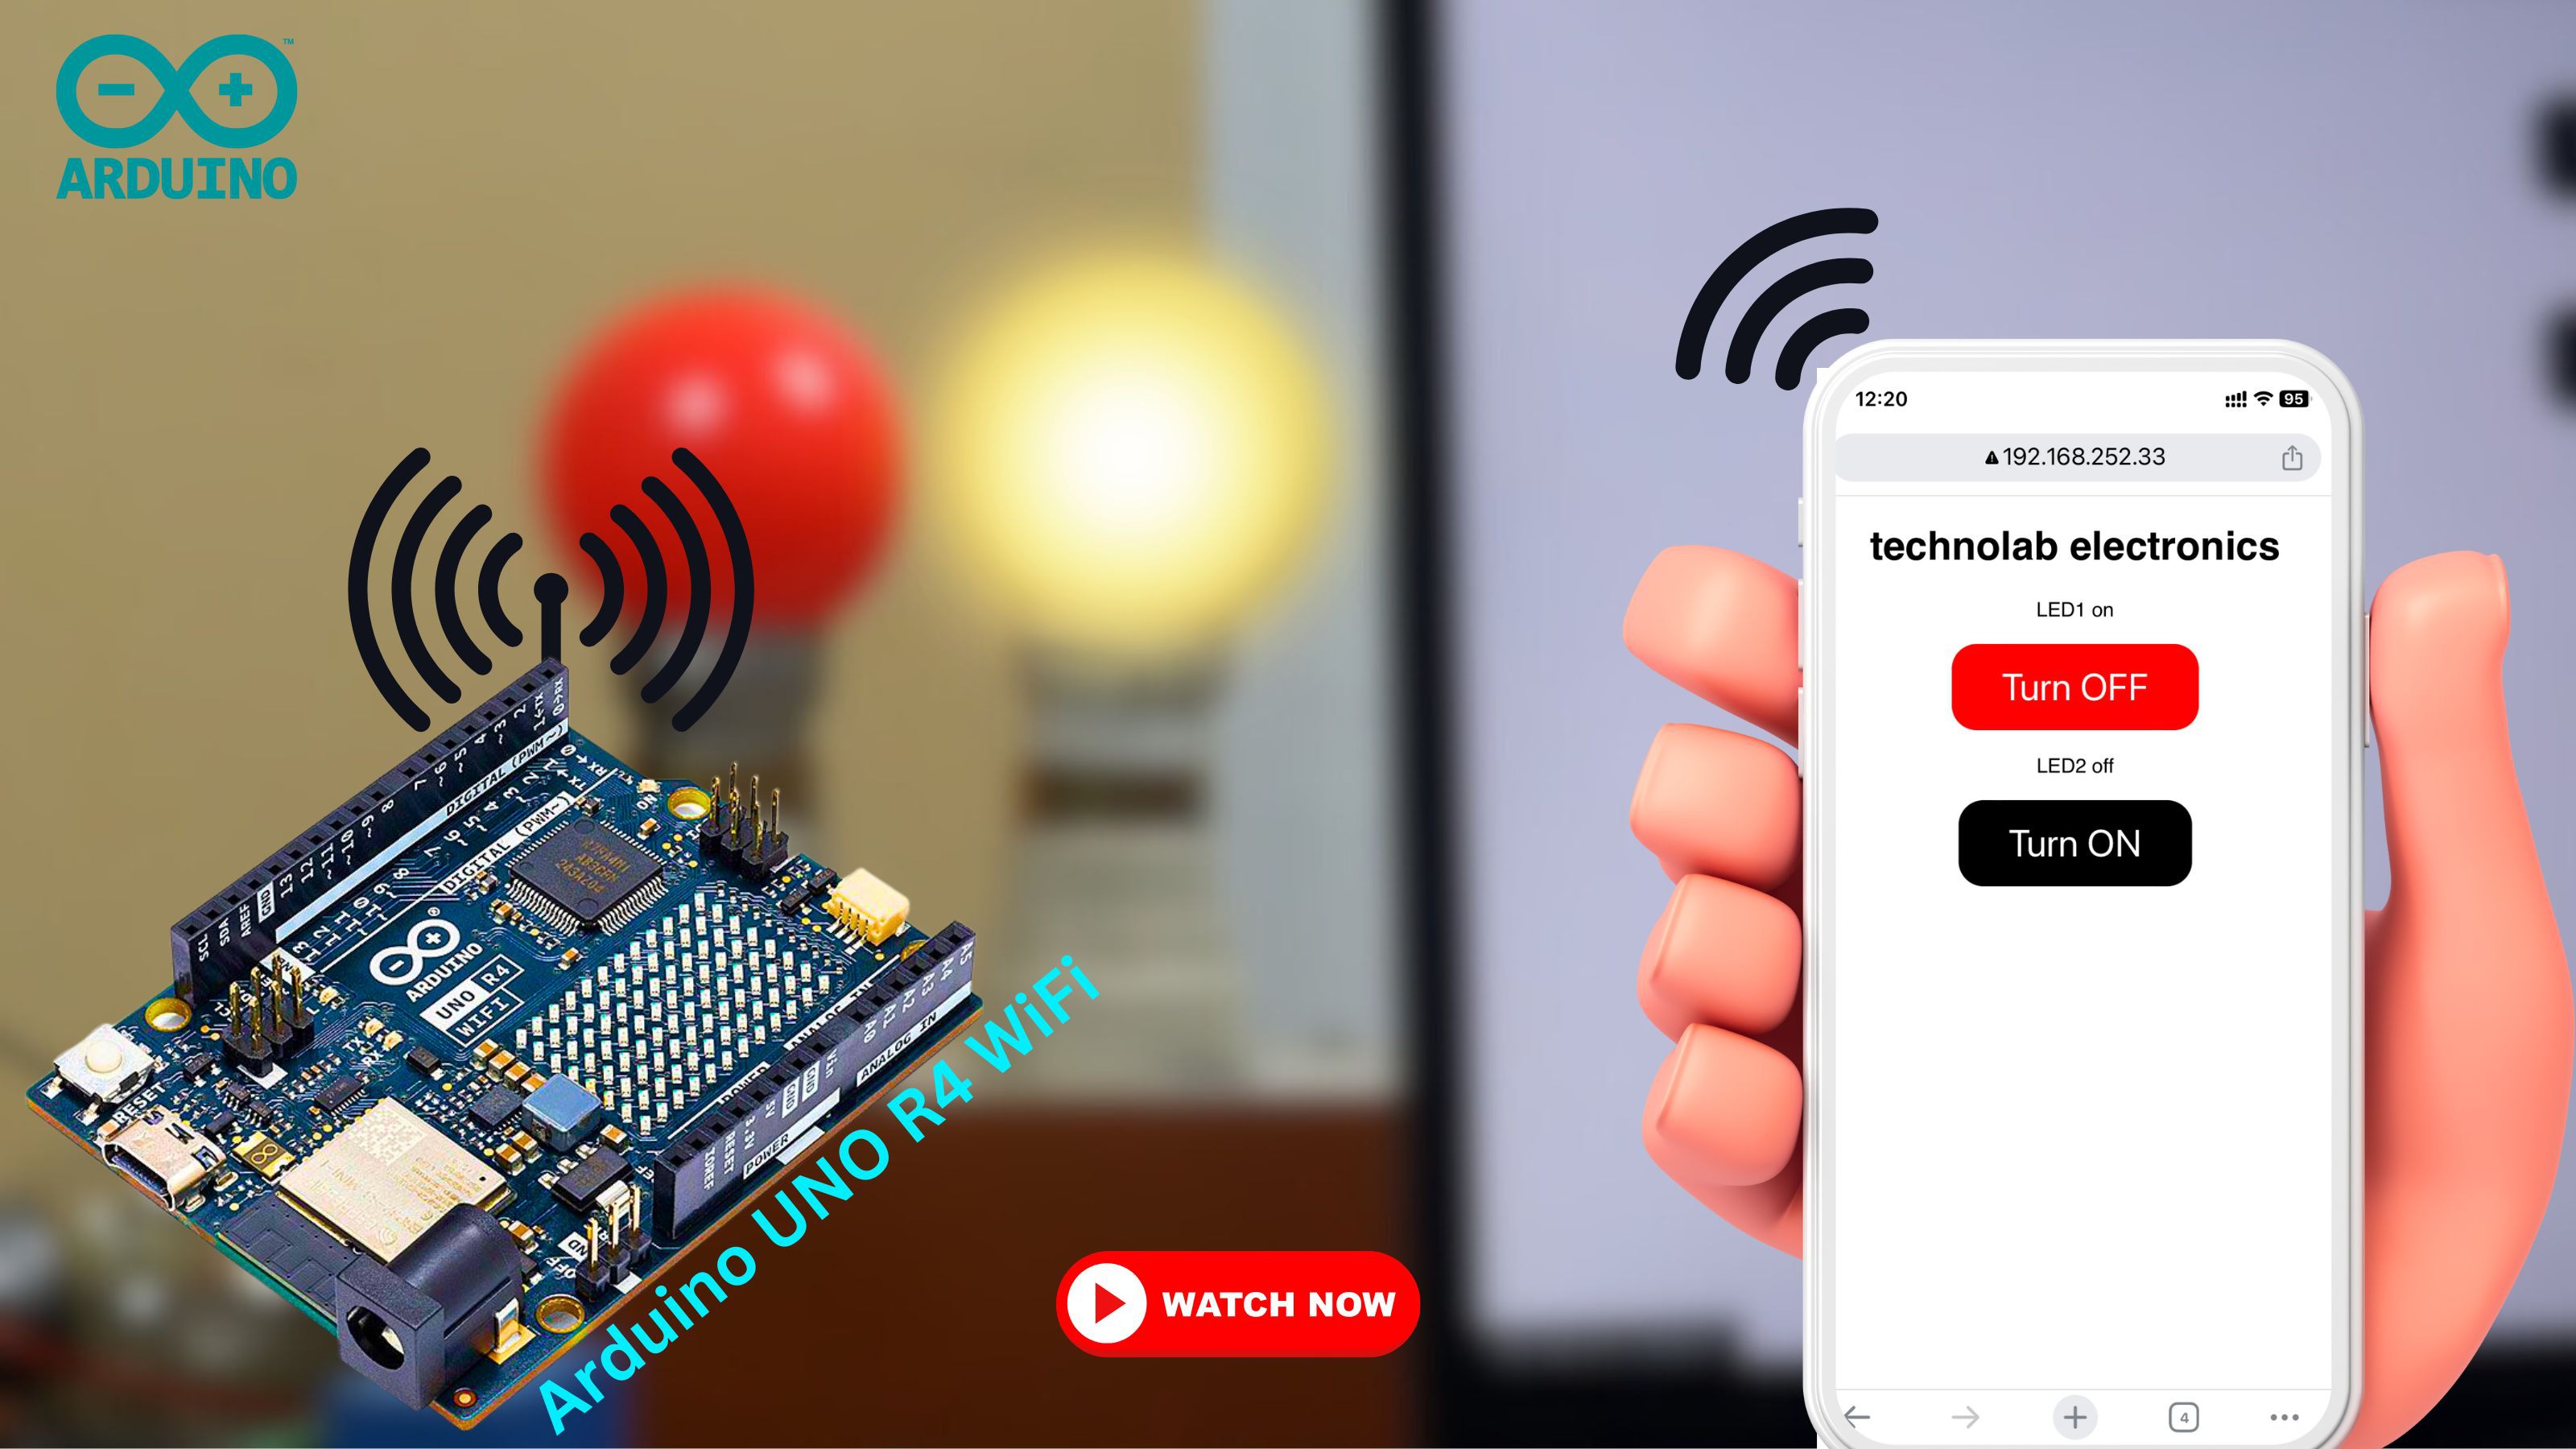 Arduino UNO R4 WiFi: Getting Started – LED Matrix Custom